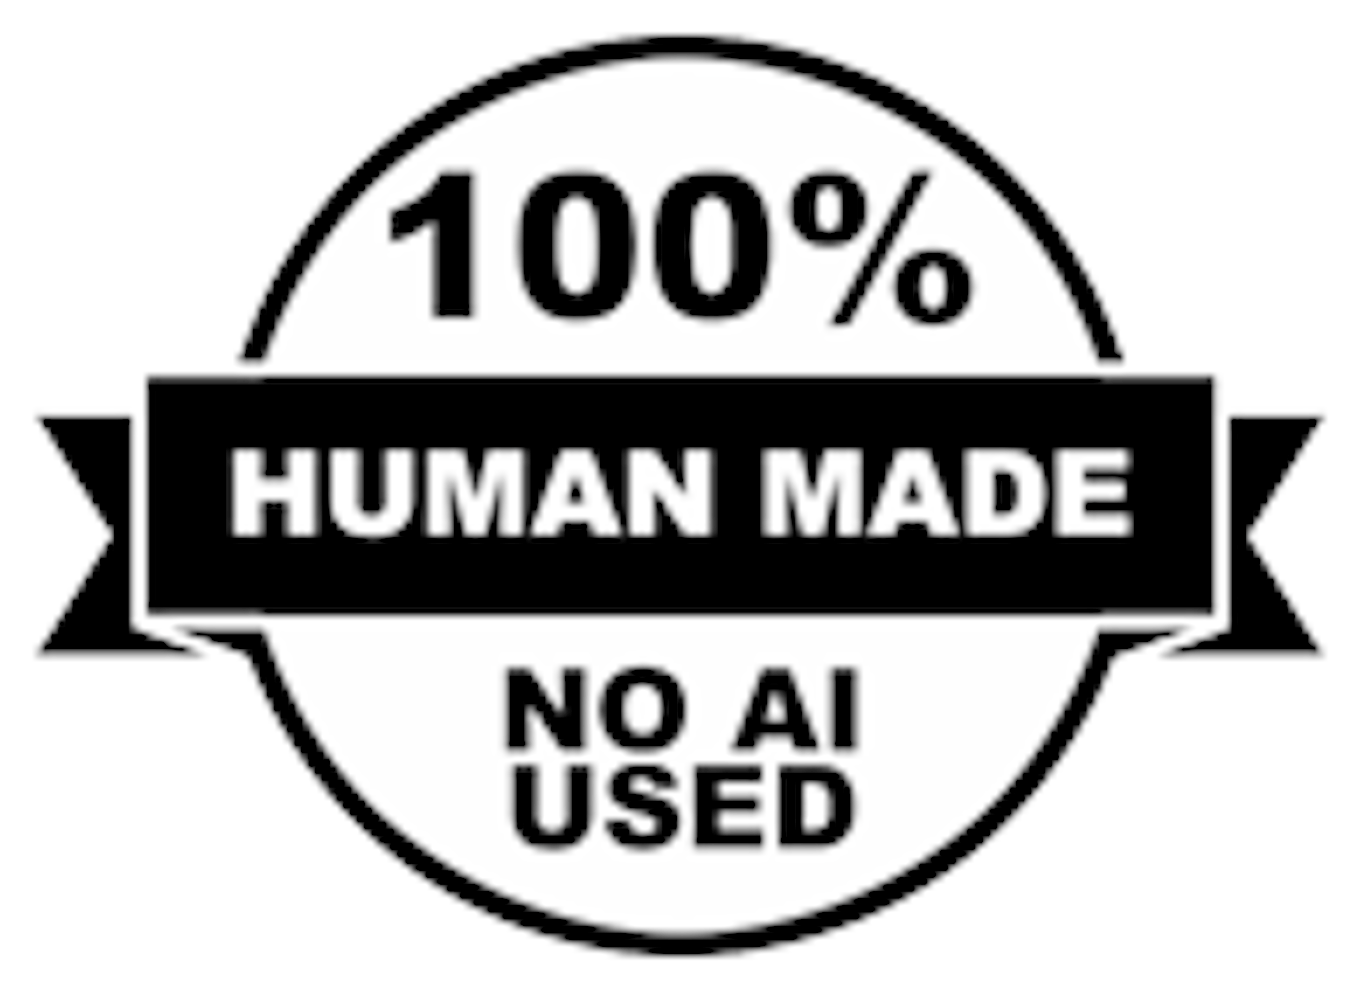 100% Human Made. No AI Used.